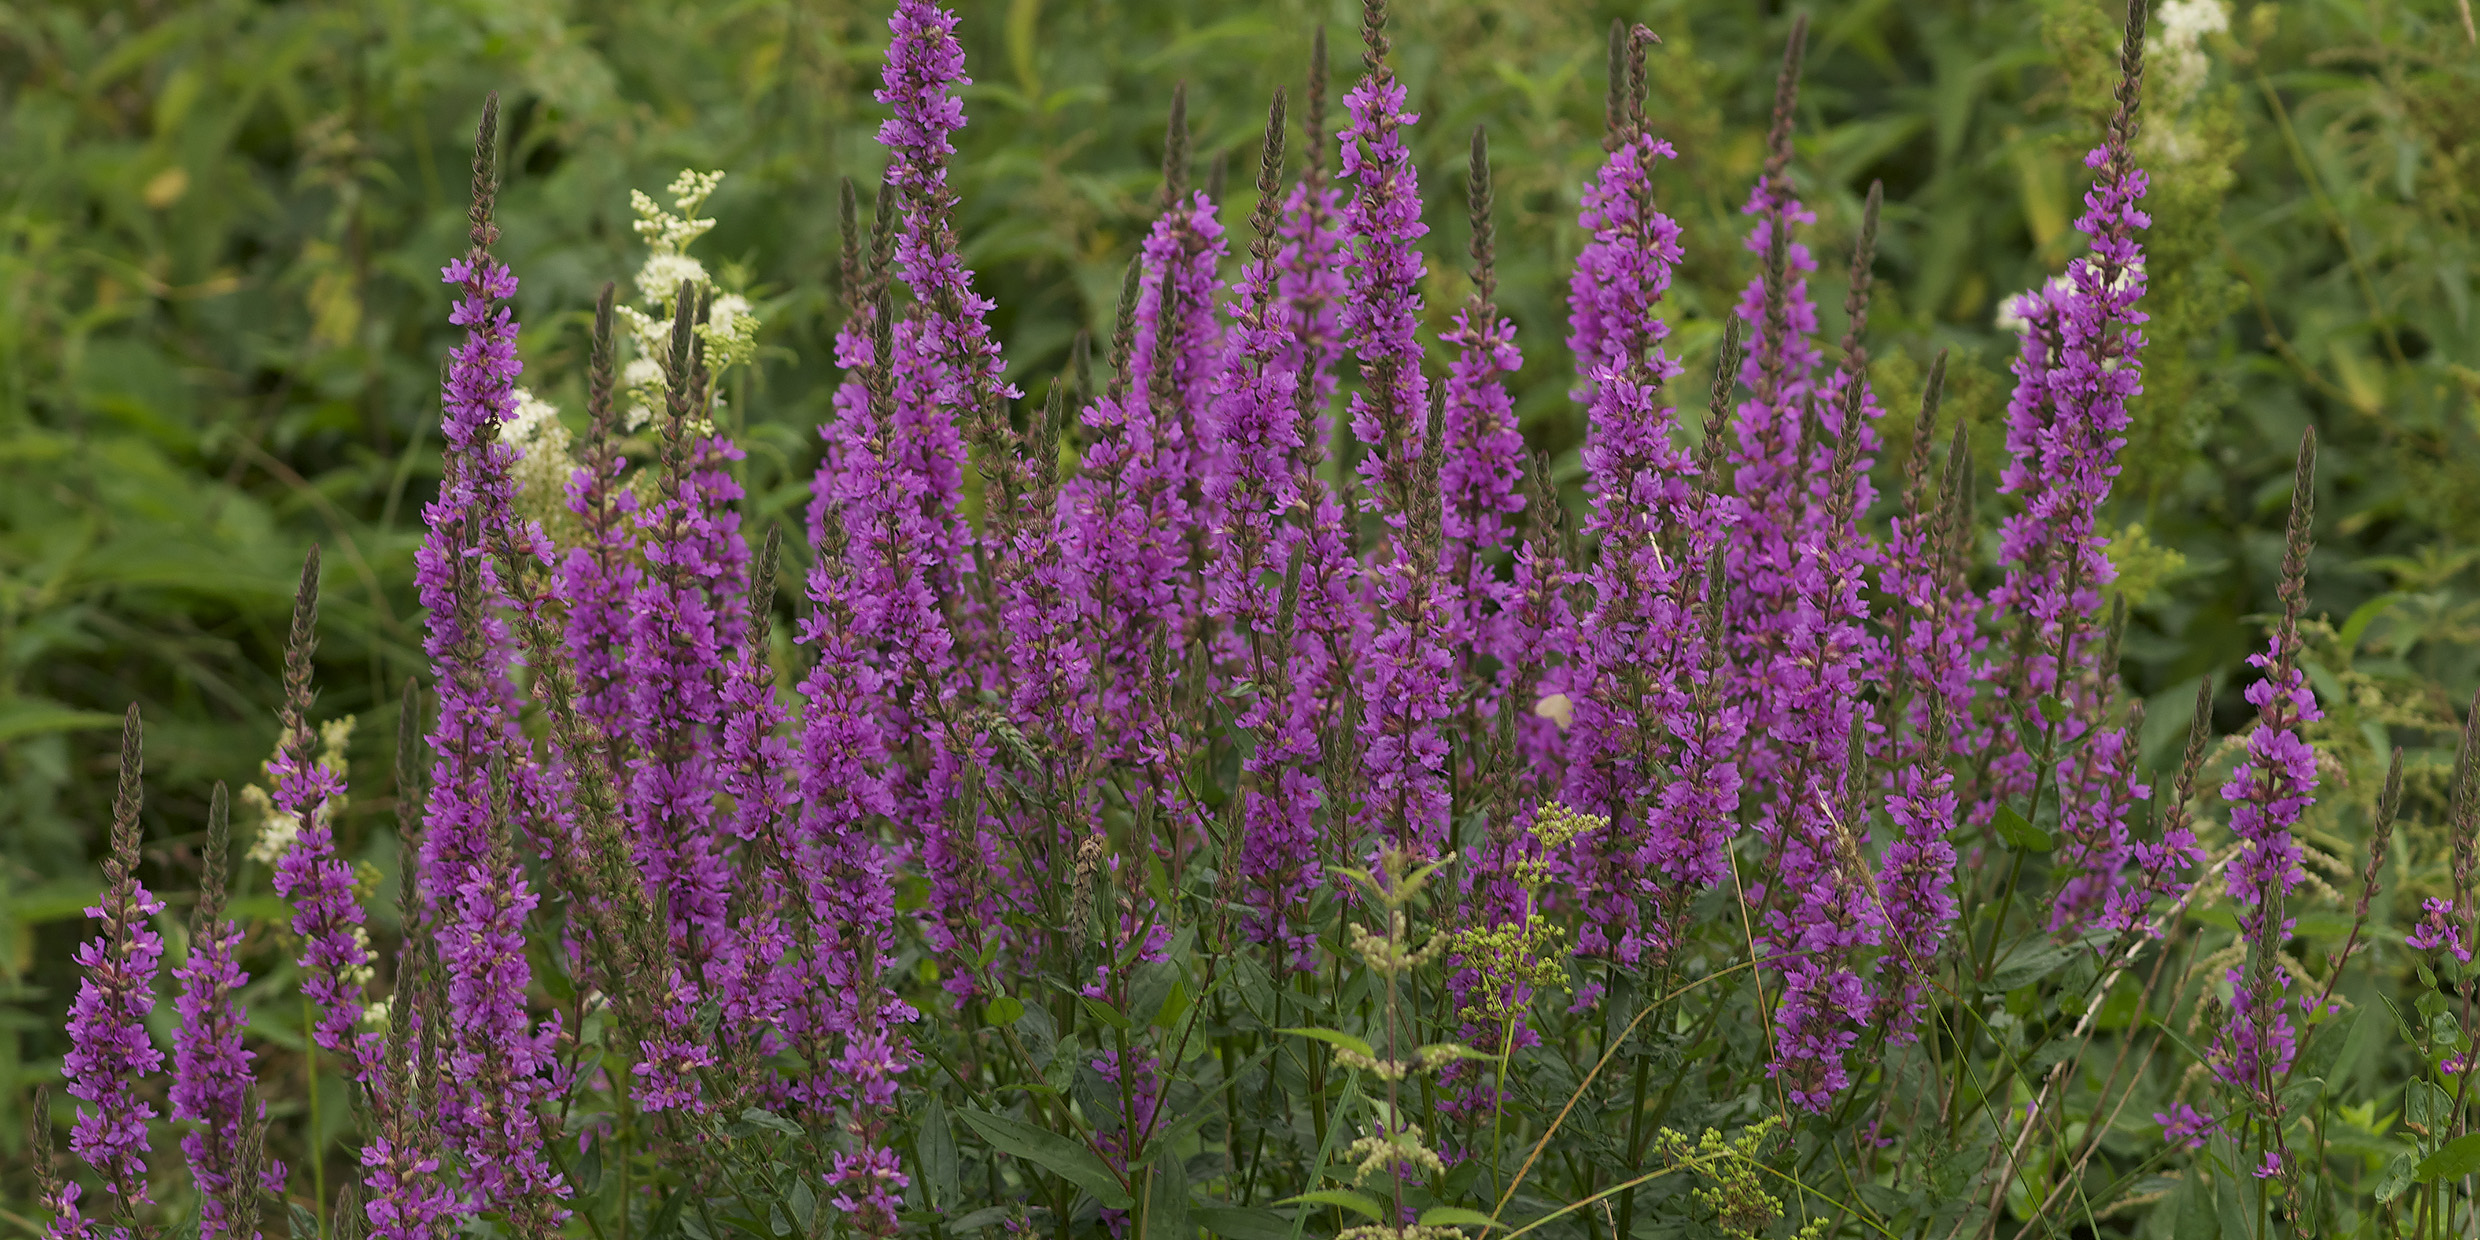 Image of spikes of purple flowers